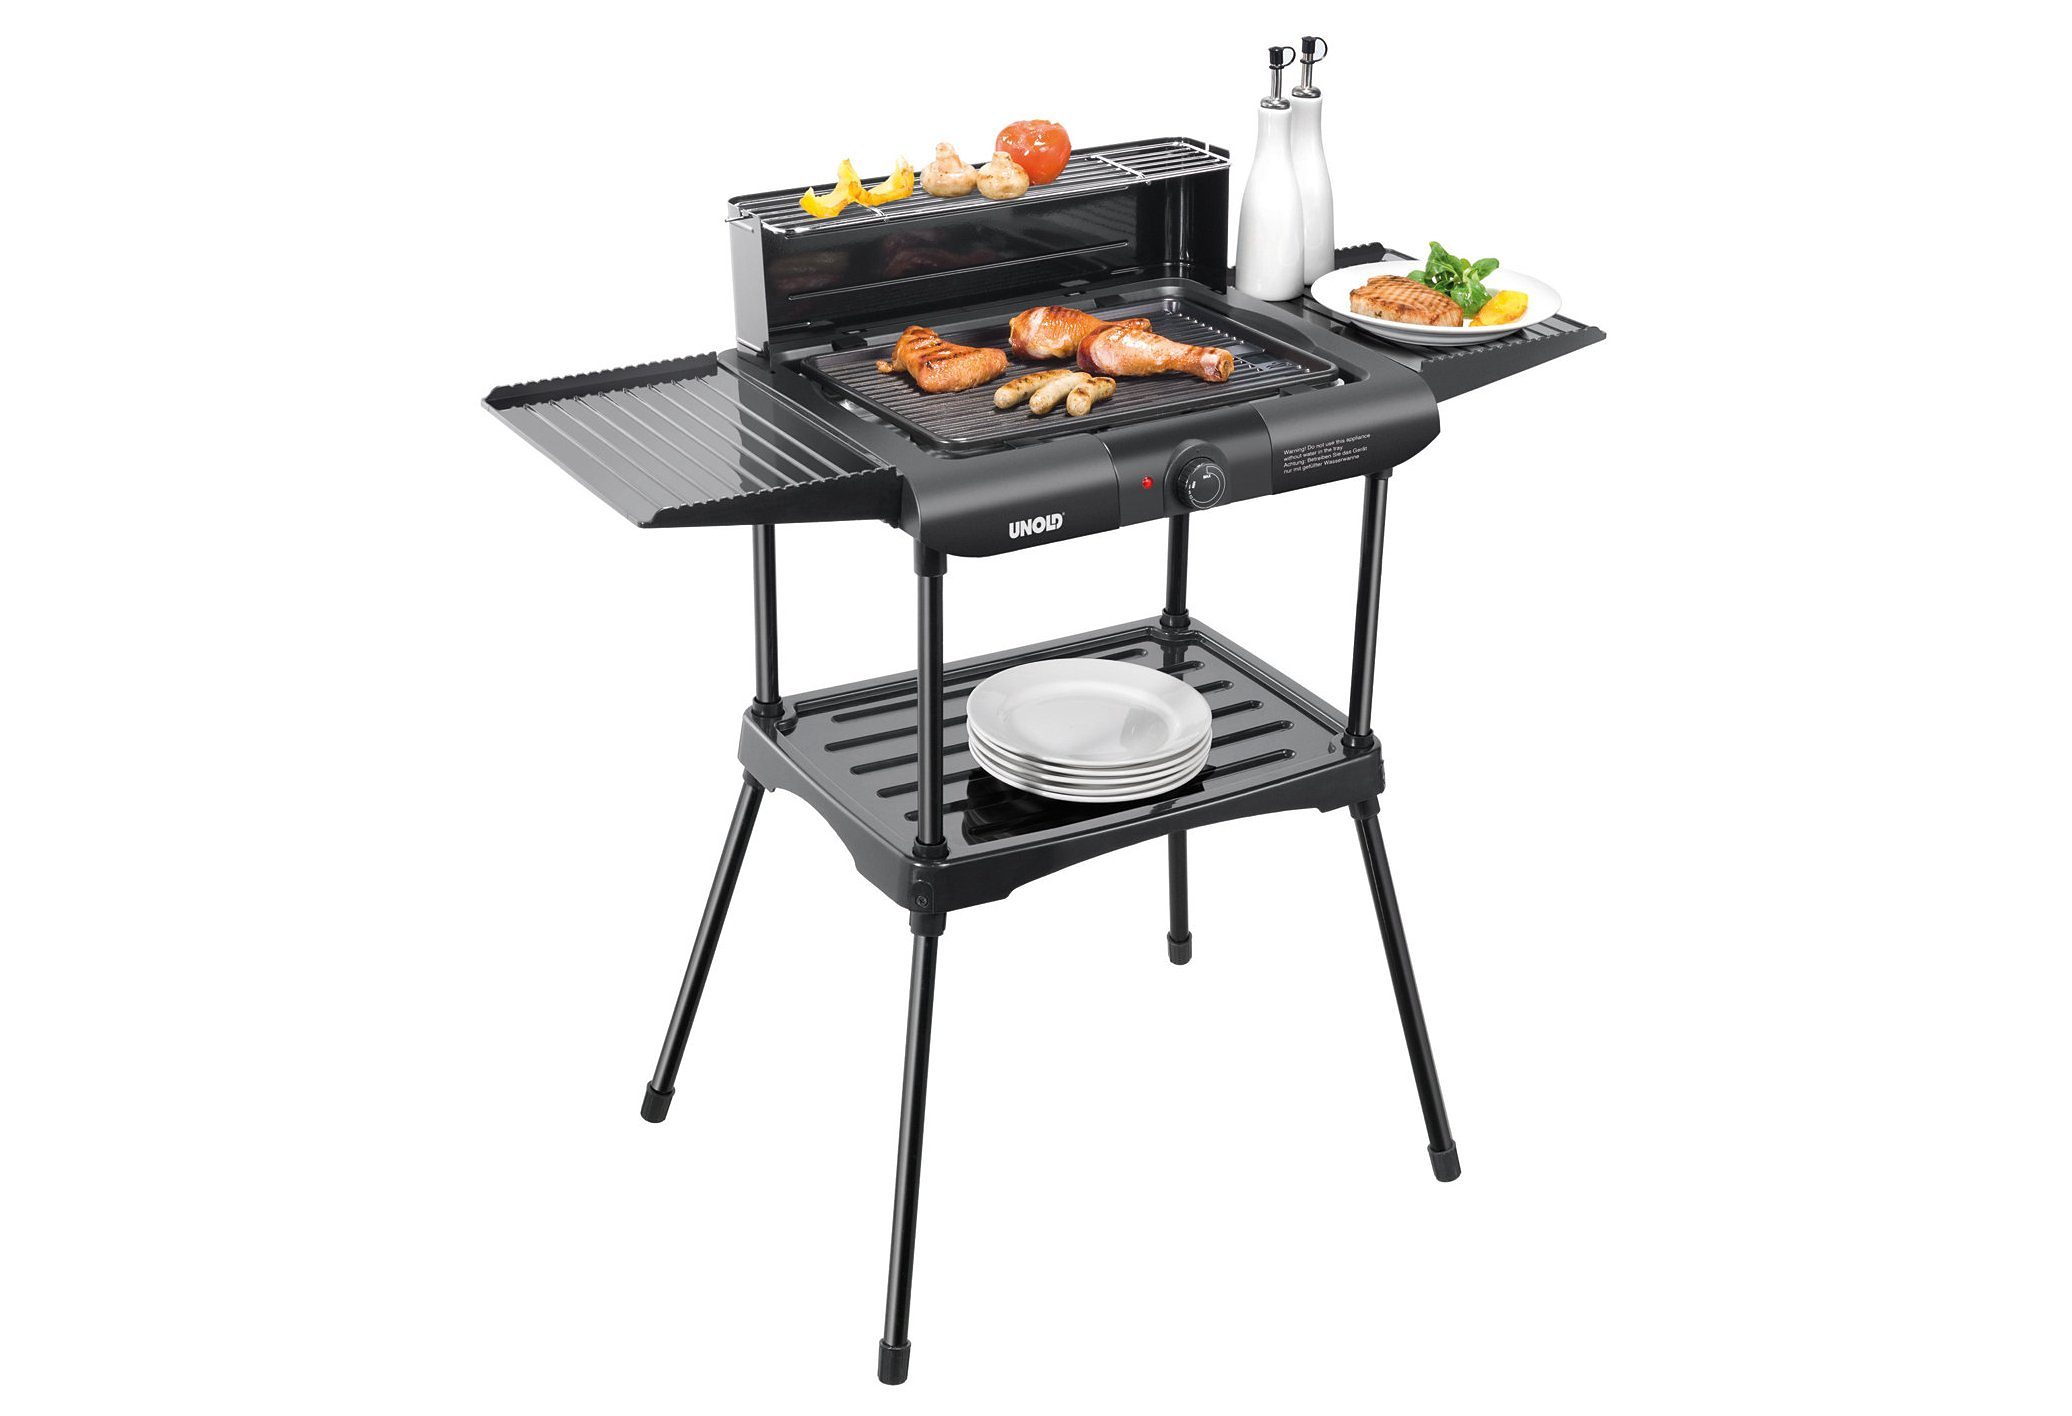 Unold 58565 barbecue-grill schwarz